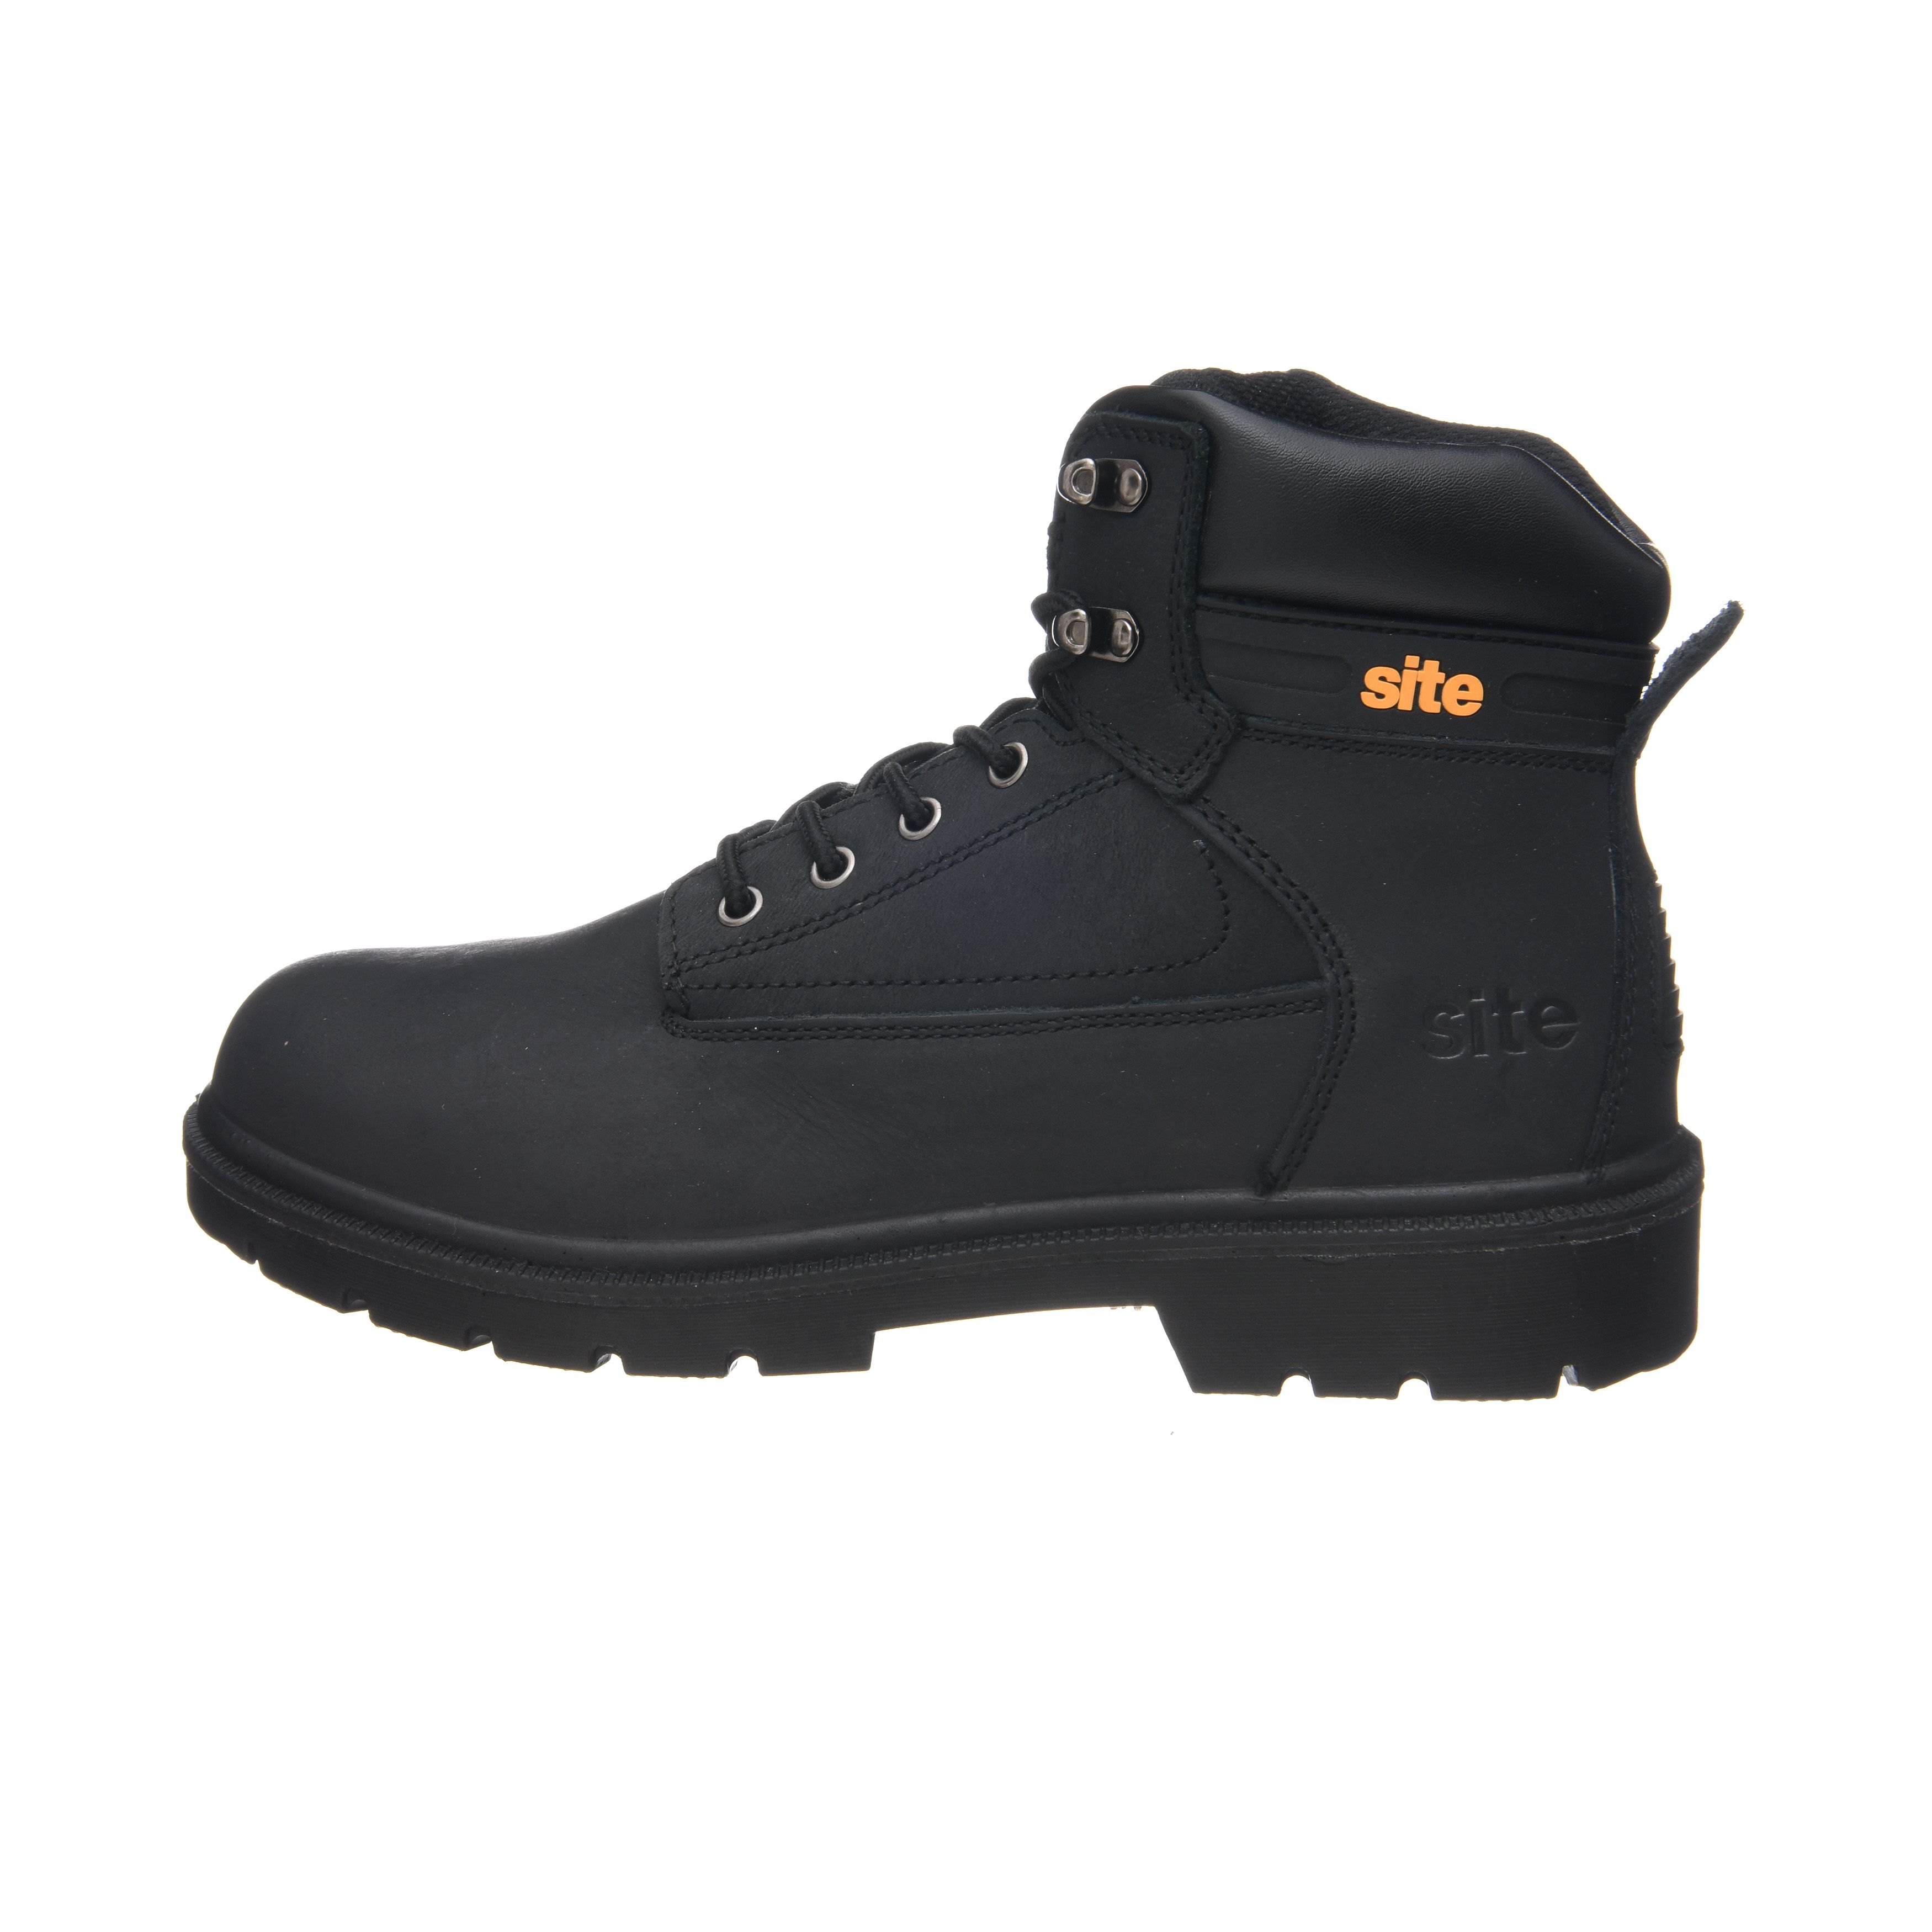 Men's Black Safety boots, Size 8